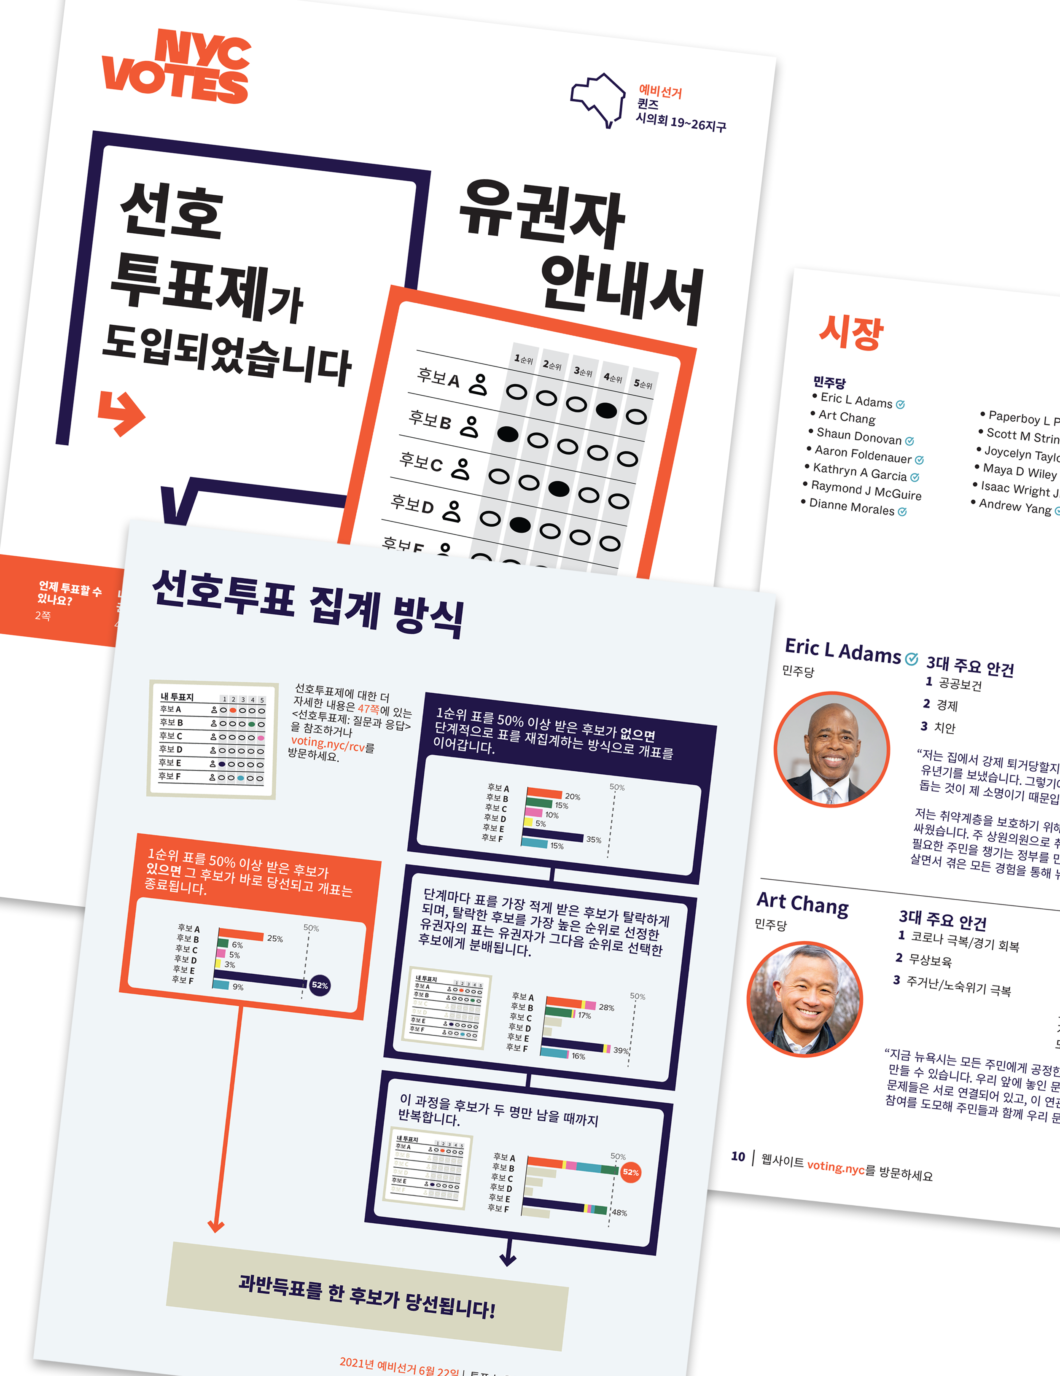 Voters Guide Korean CD 19-26 layout